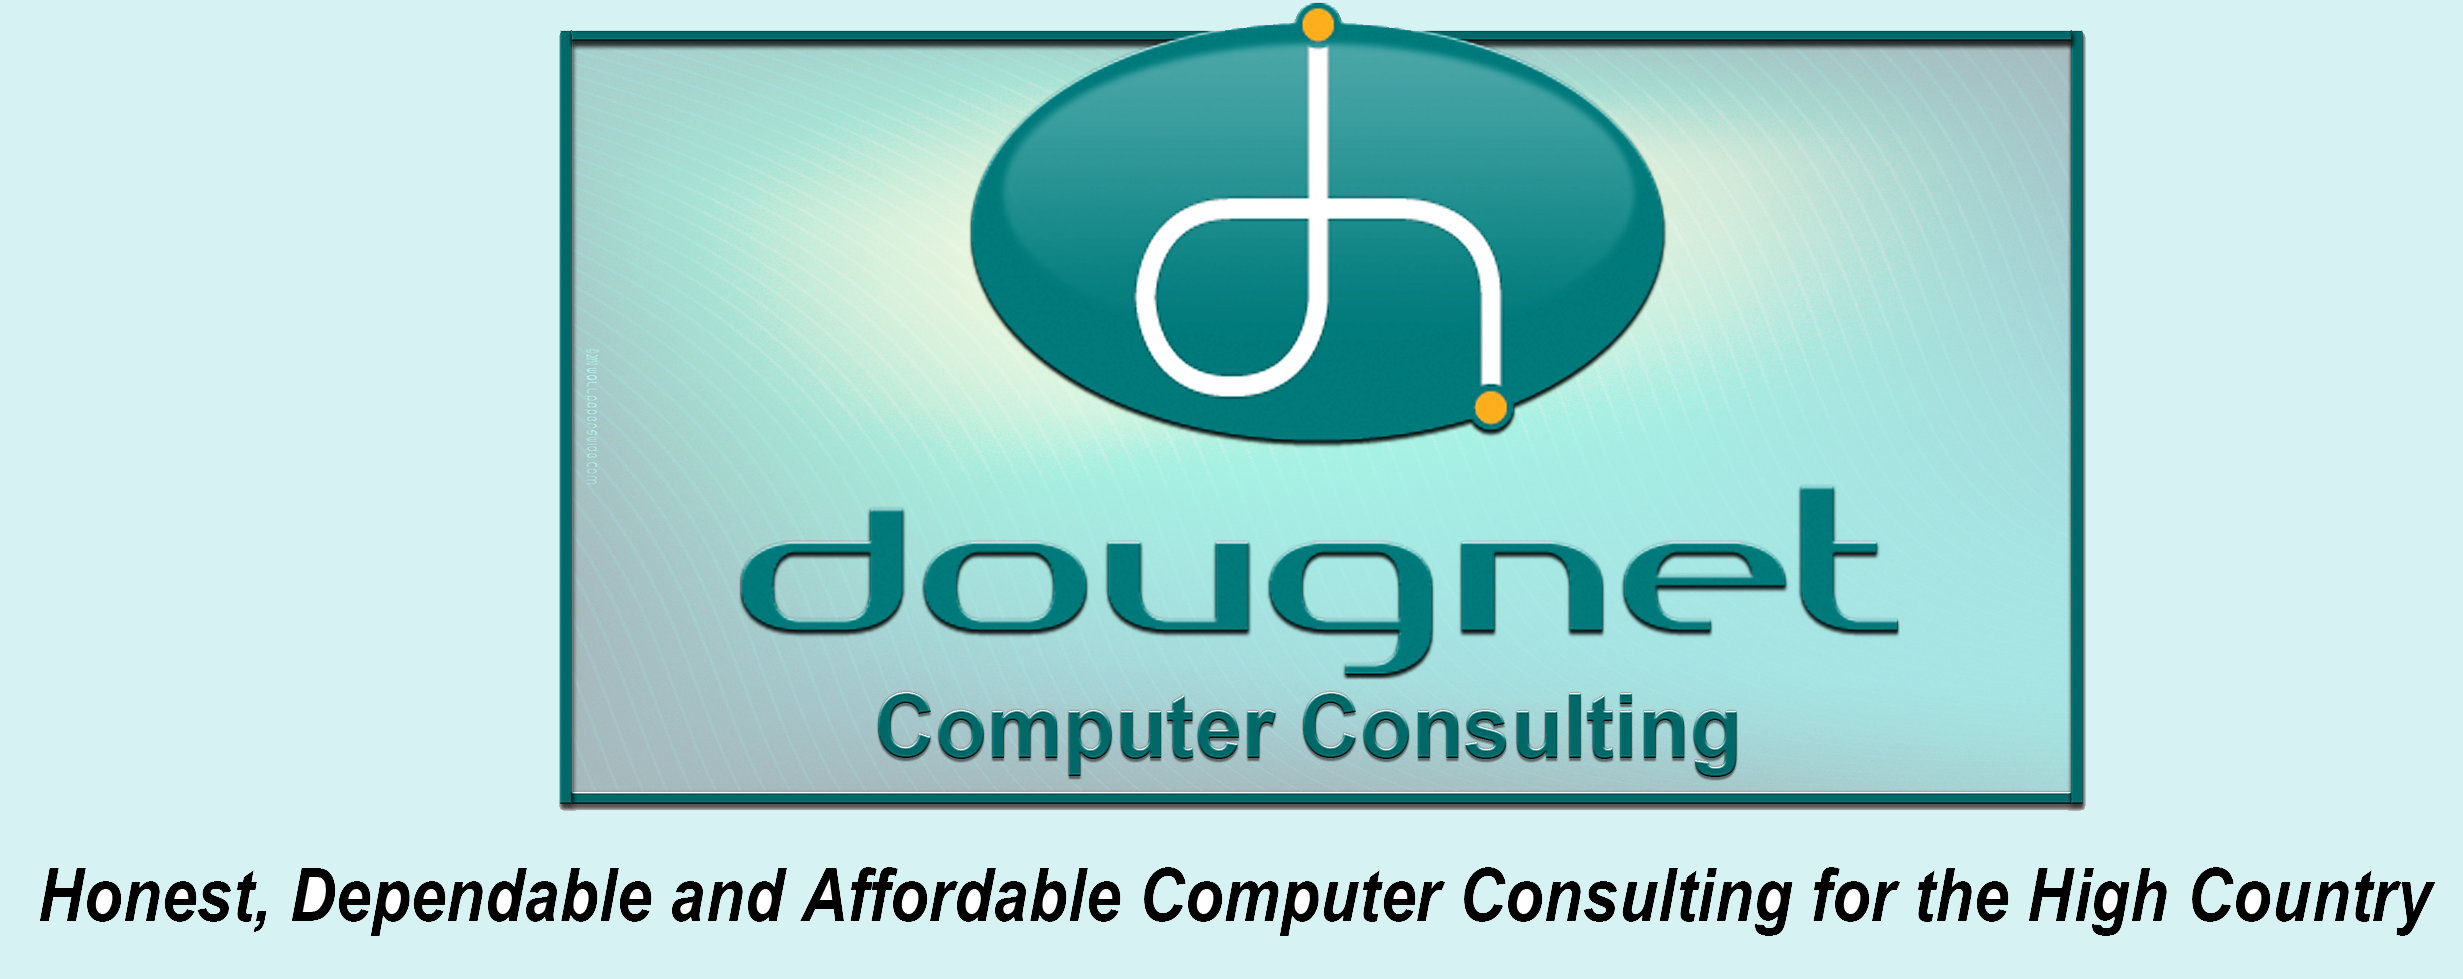 Dougnet Computer Consulting Logo